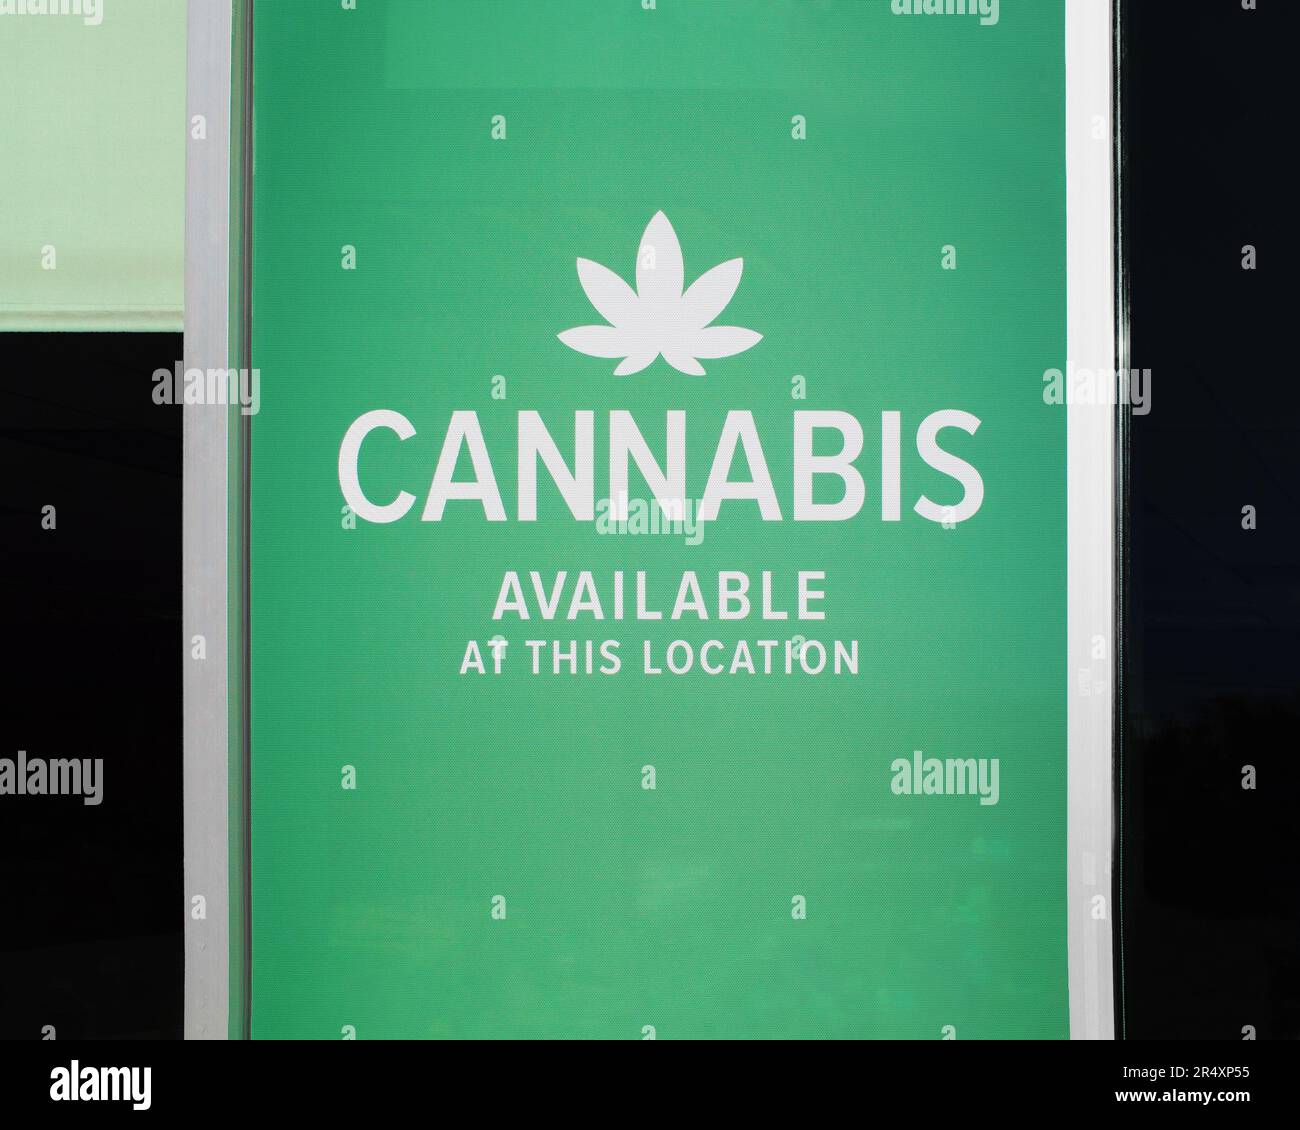 Cannabis available sign on building facade Stock Photo